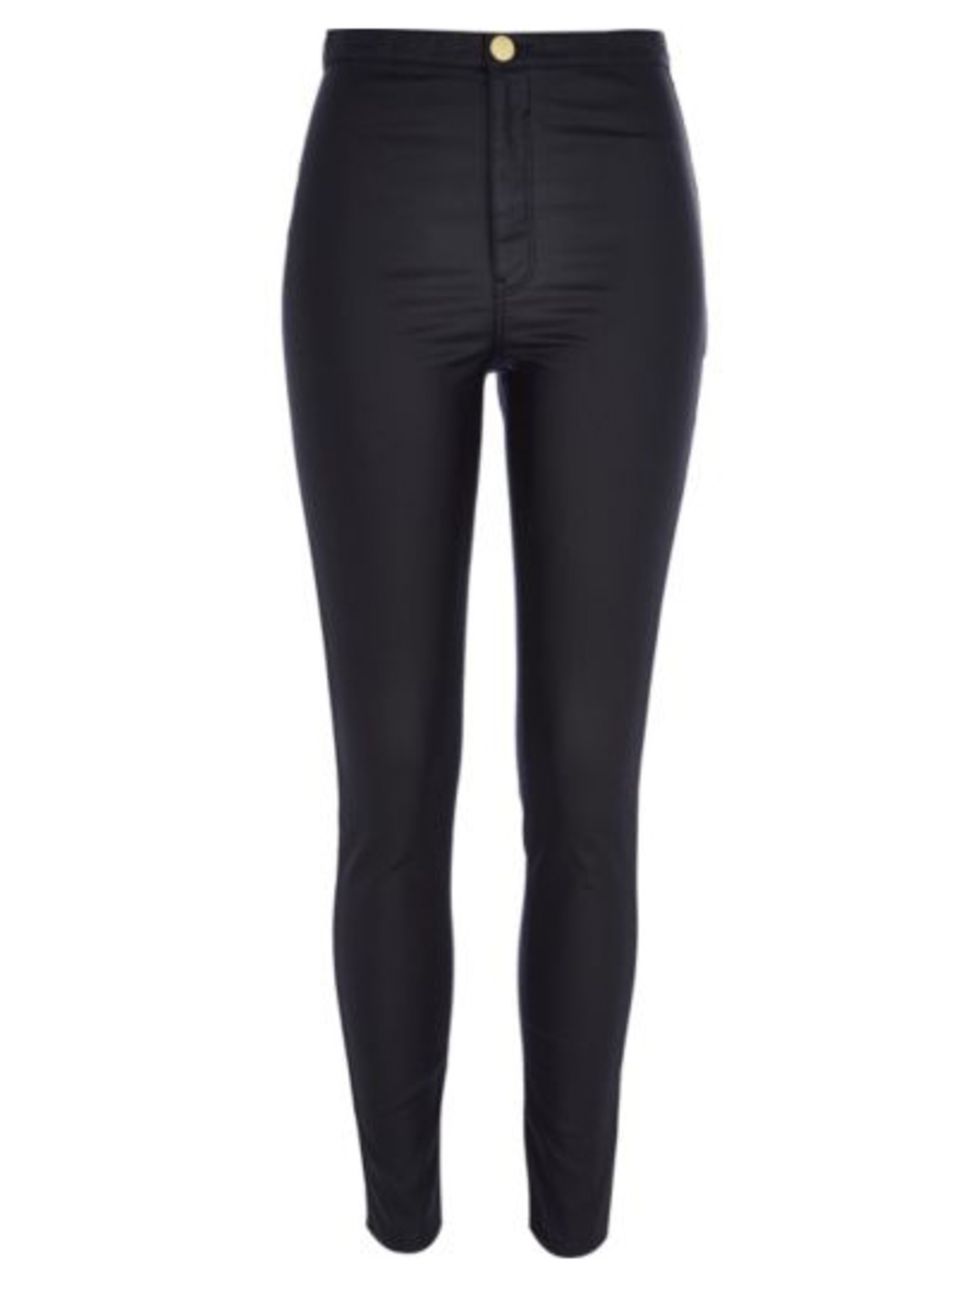 <p>Black trousers, £40 at <a href="http://www.riverisland.com/women/jeans/tube-pants/Black-coated-tube-pants-659049">River Island</a>.</p>